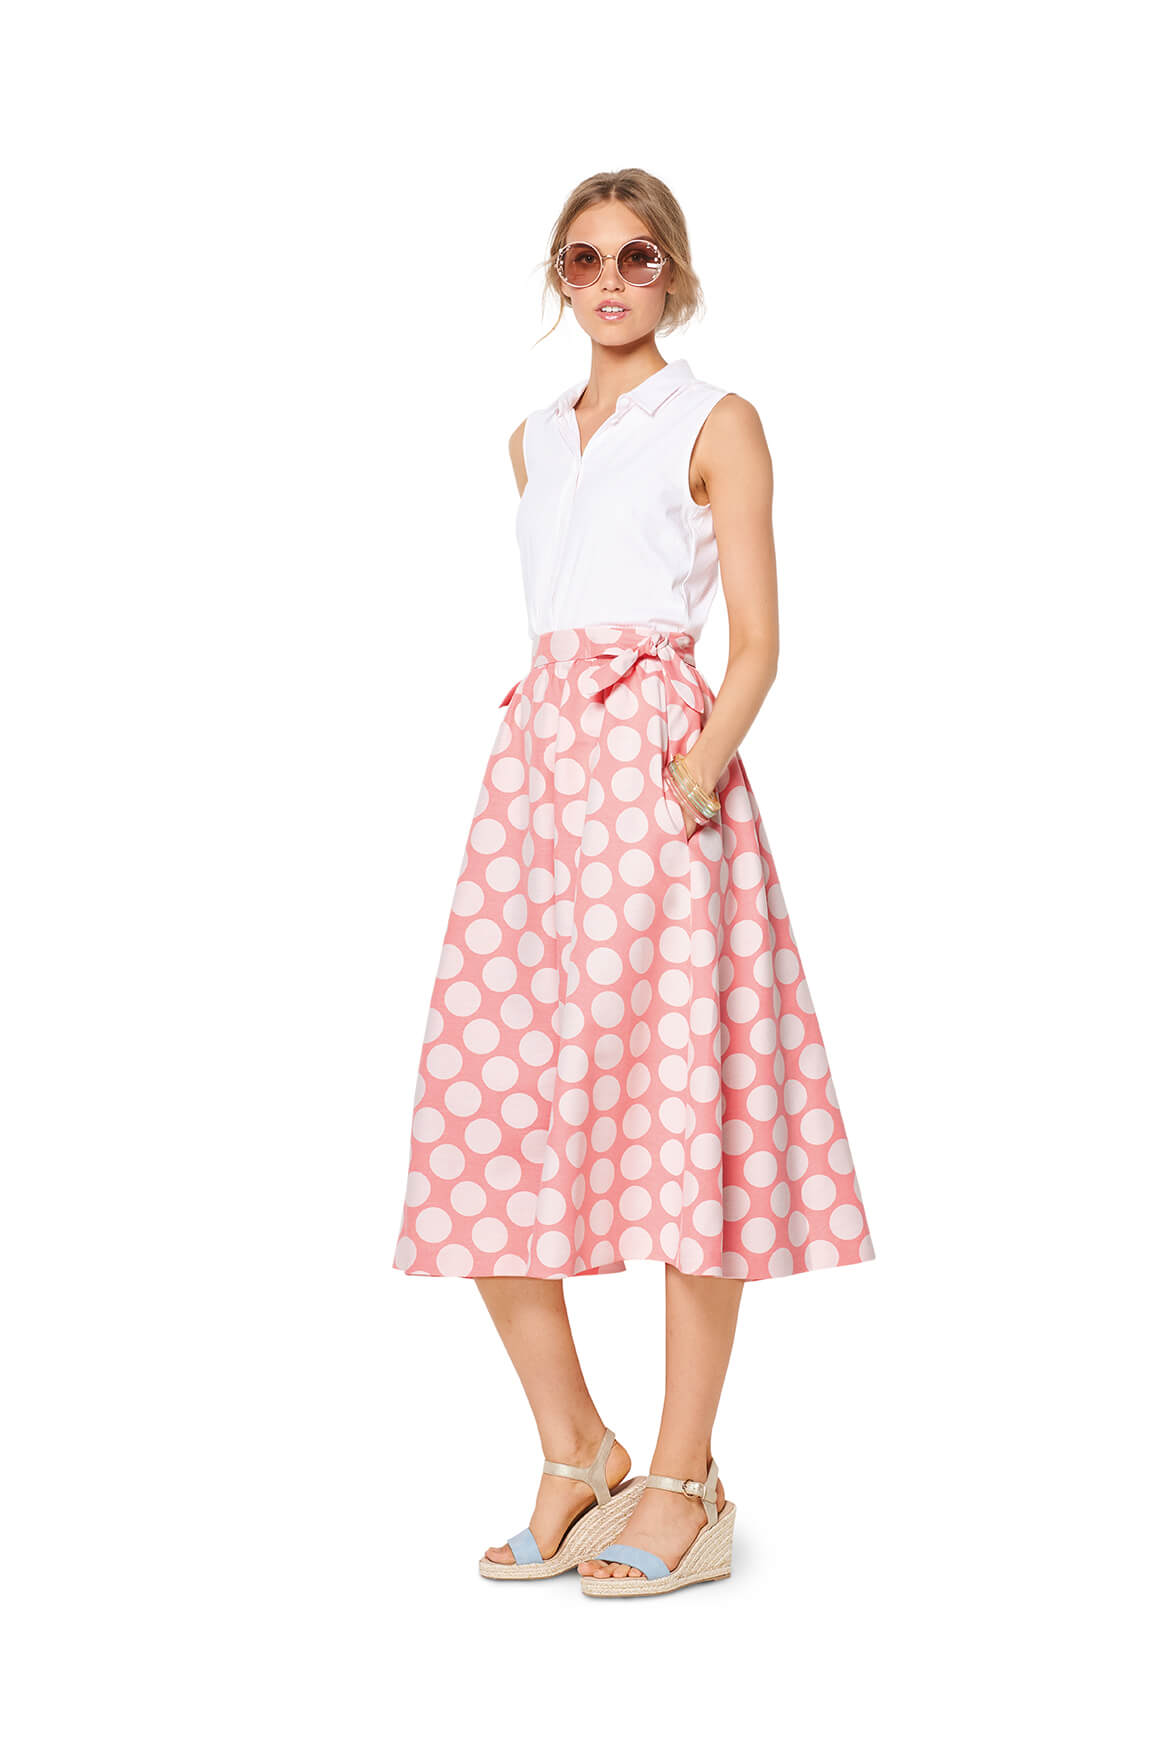 Burda Style Pattern 6319 Misses' bell shaped skirt